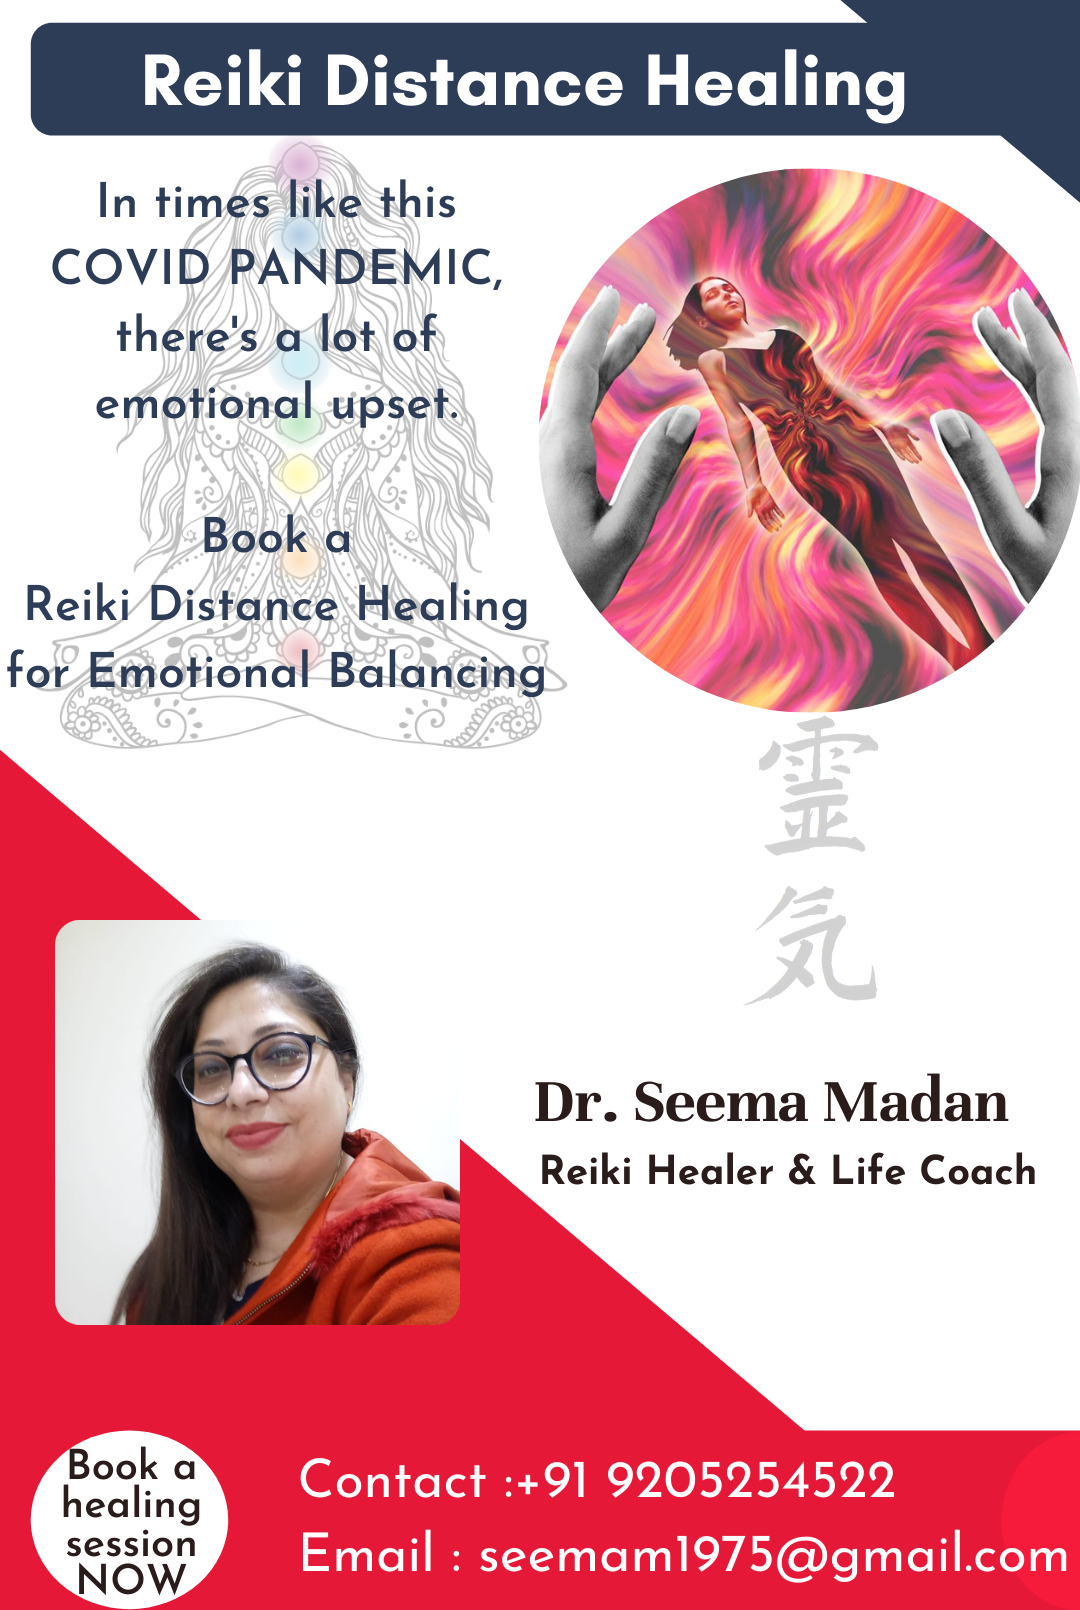 Reiki Energy Healing by Dr. Seema Madan - Kochi